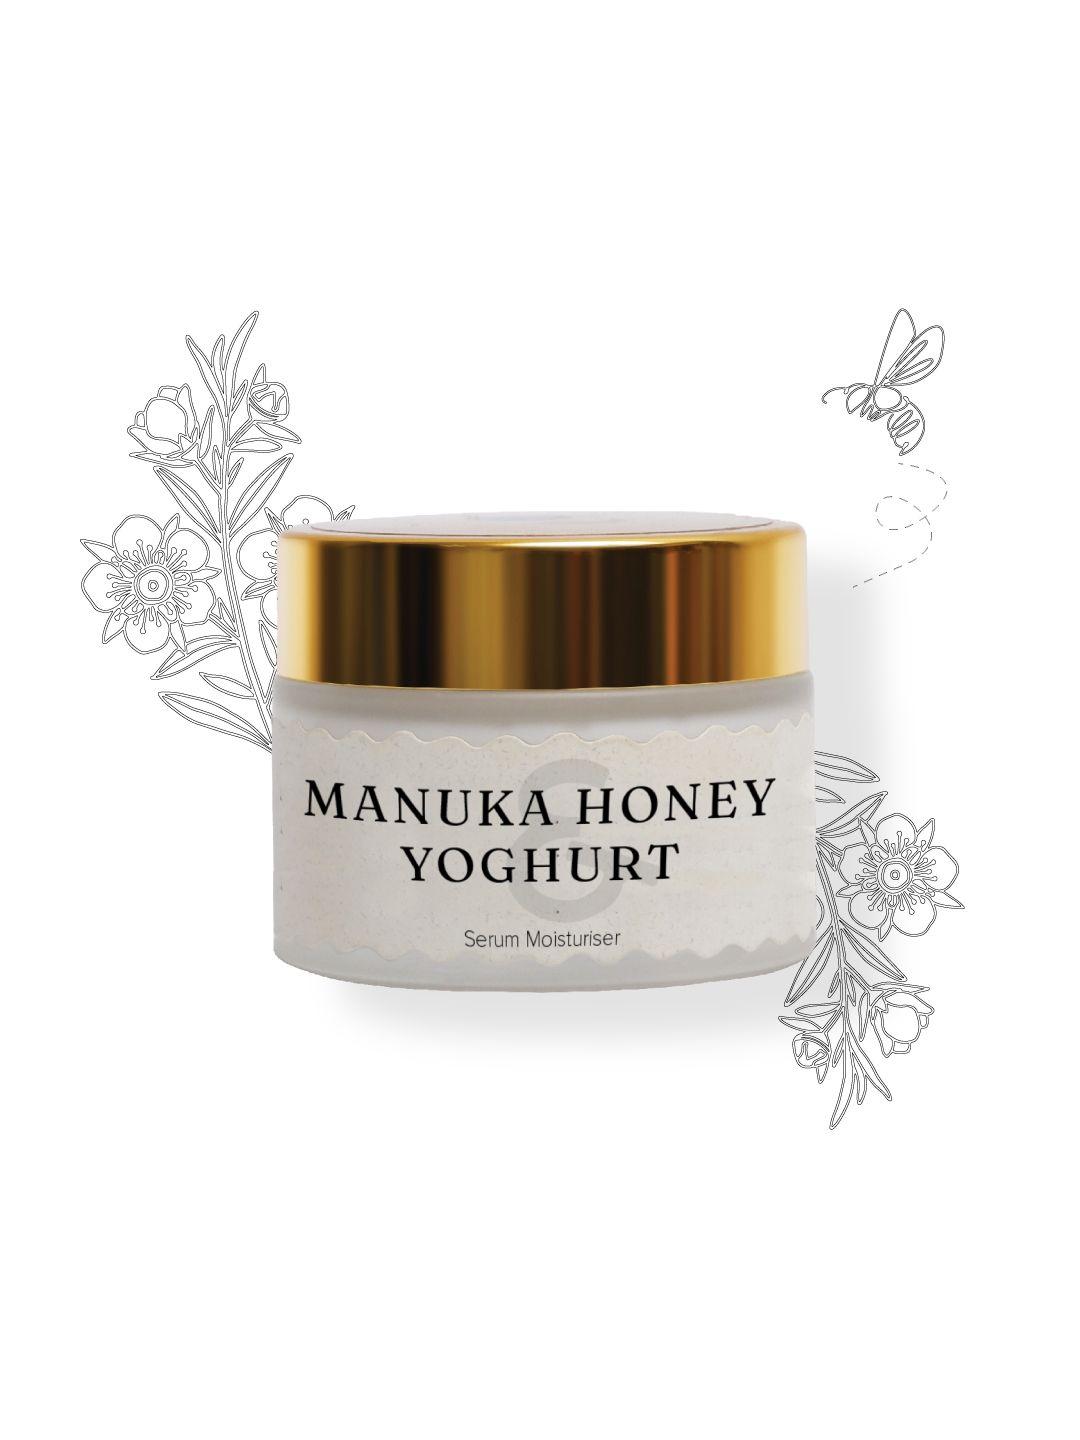 dromen & co manuka honey and yoghurt serum moisturiser 50 g